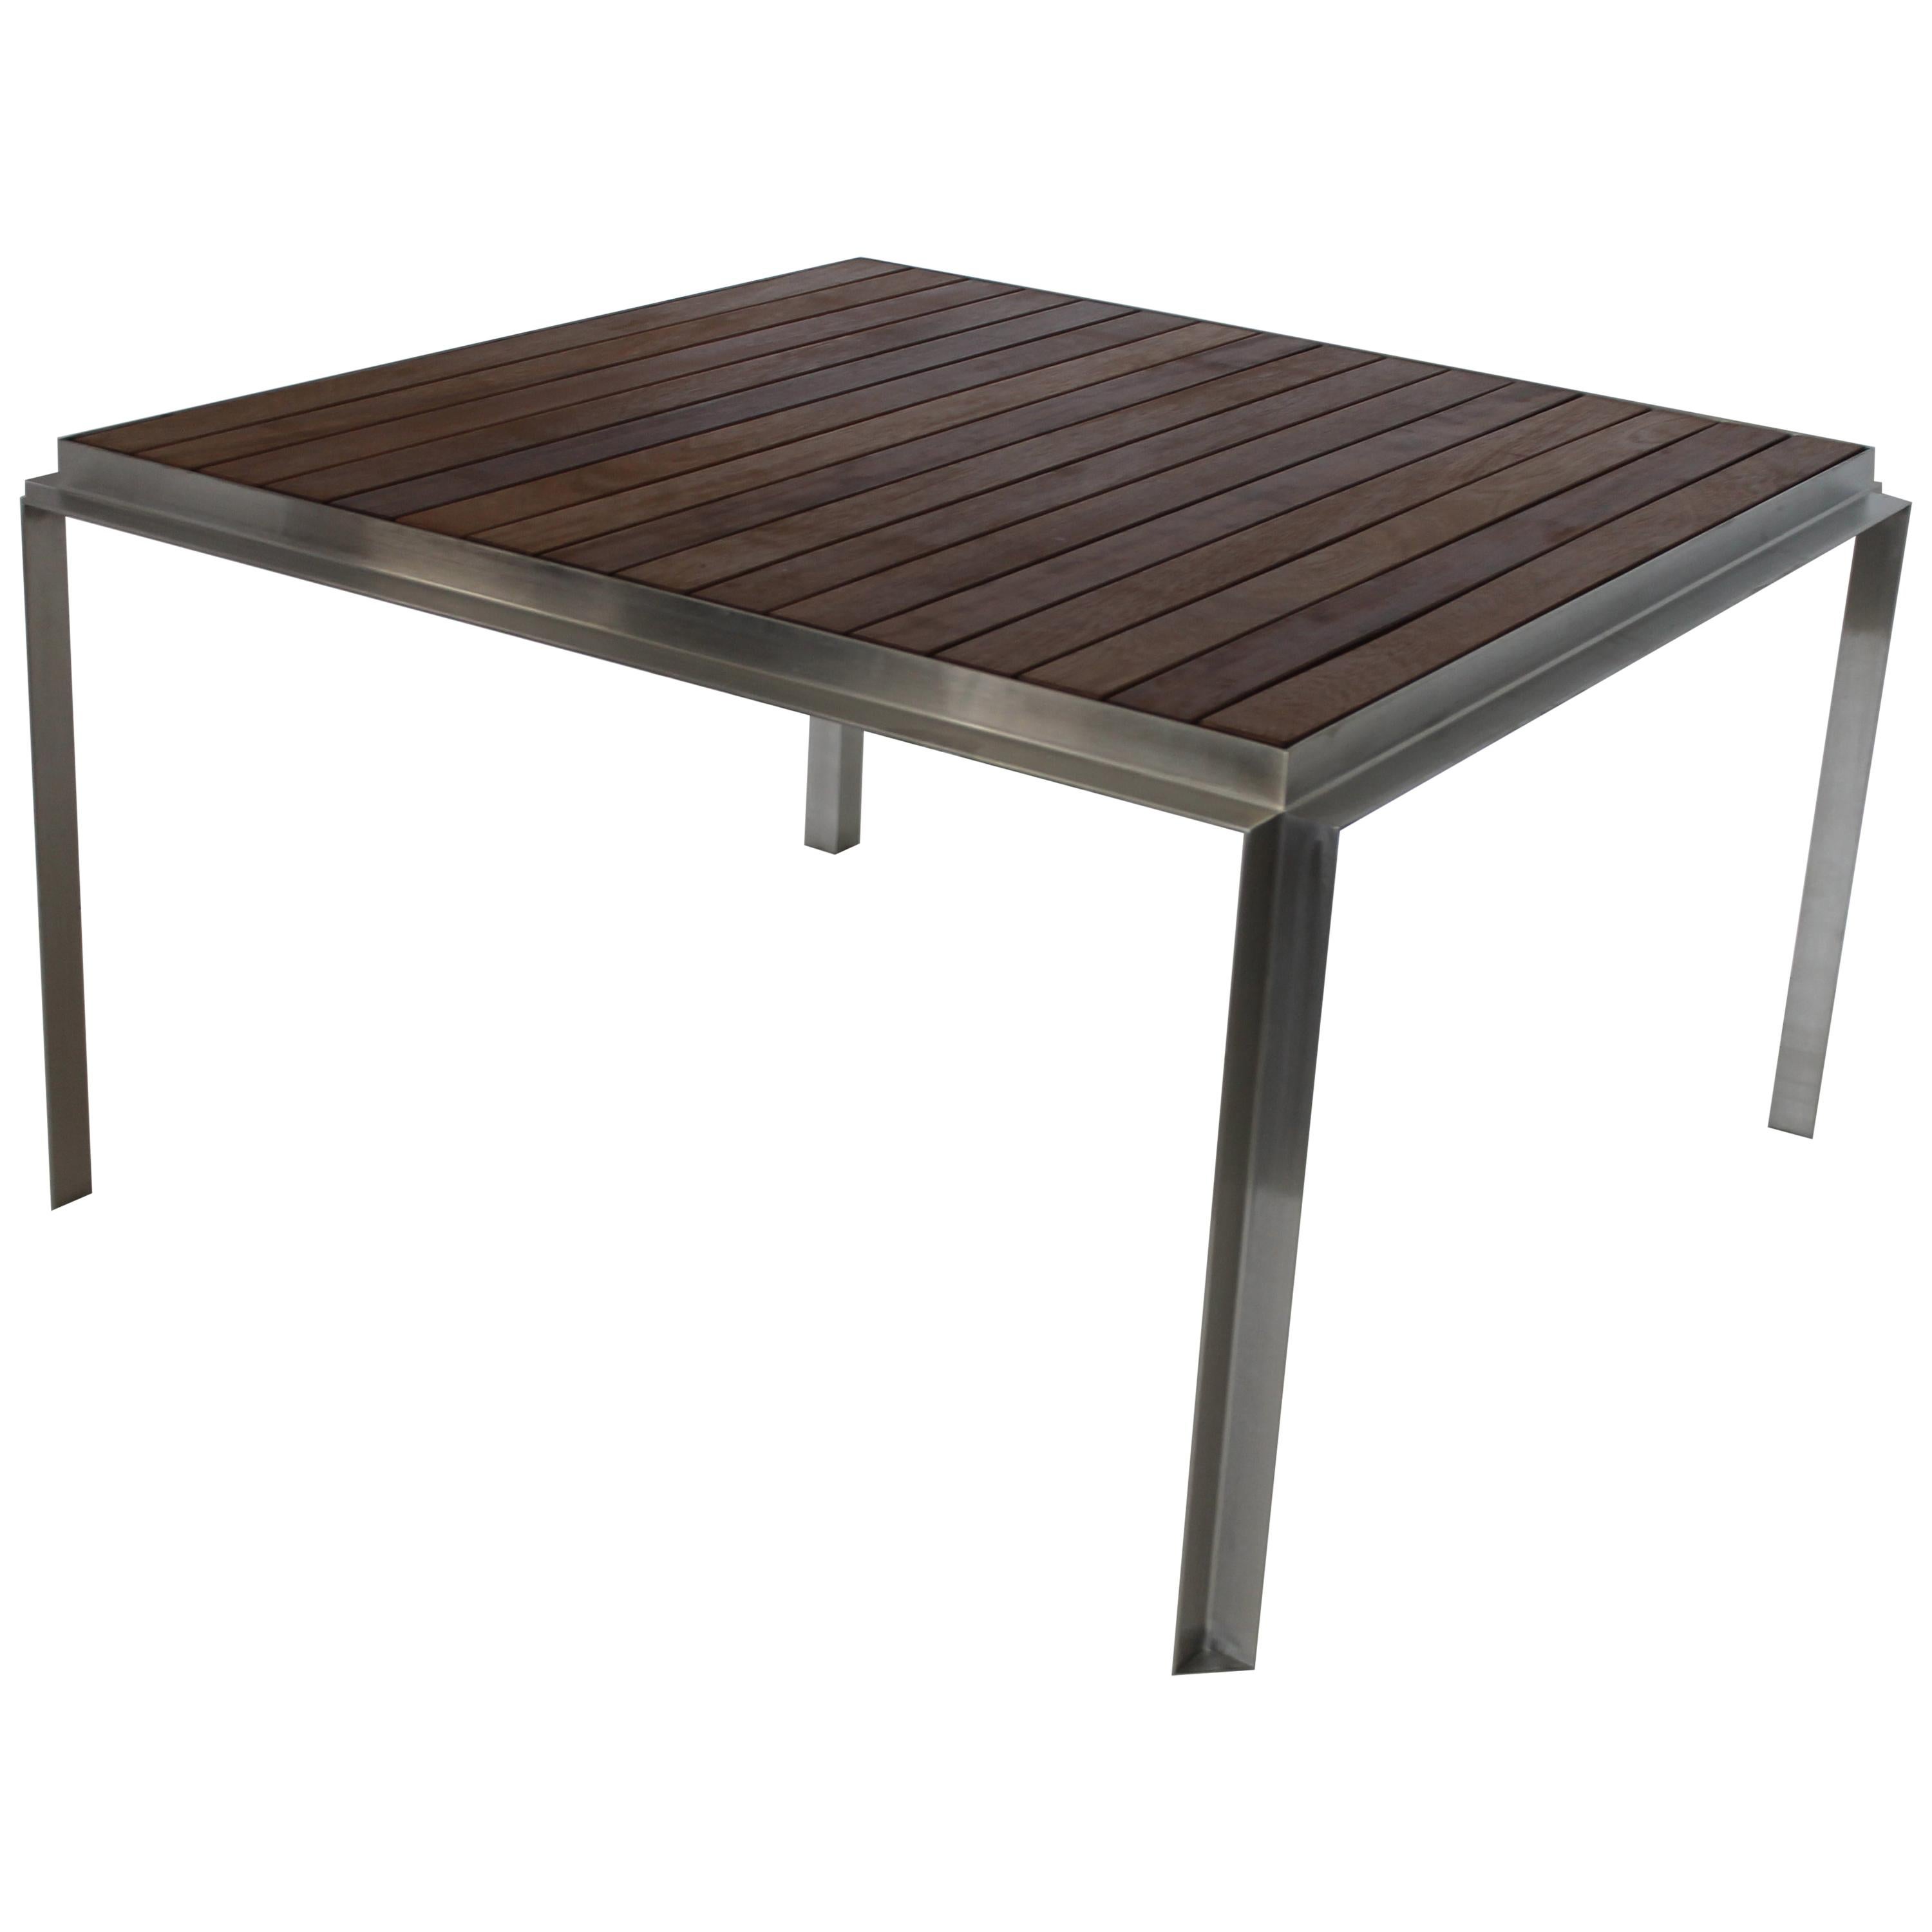 Dimensione Fuoco "Madrid" Outdoor Table, Designed by Baeza